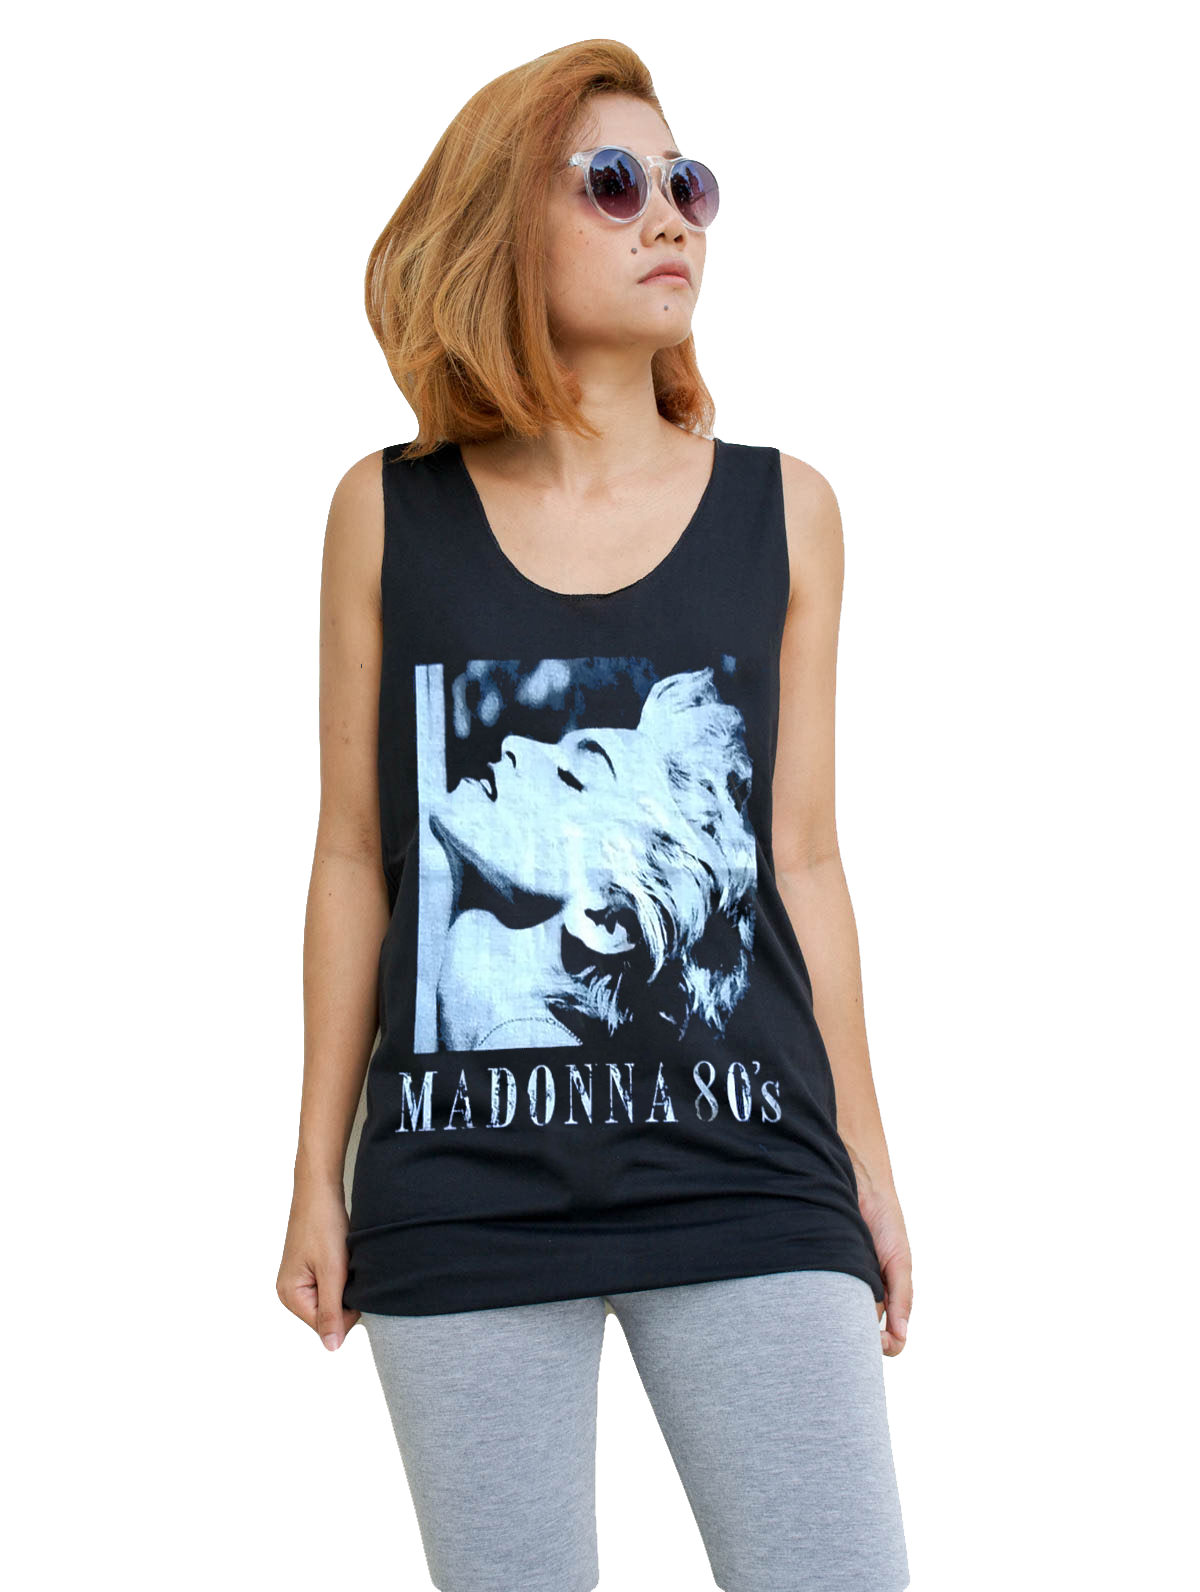 Unisex Madonna Tank-Top Singlet vest Sleeveless T-shirt